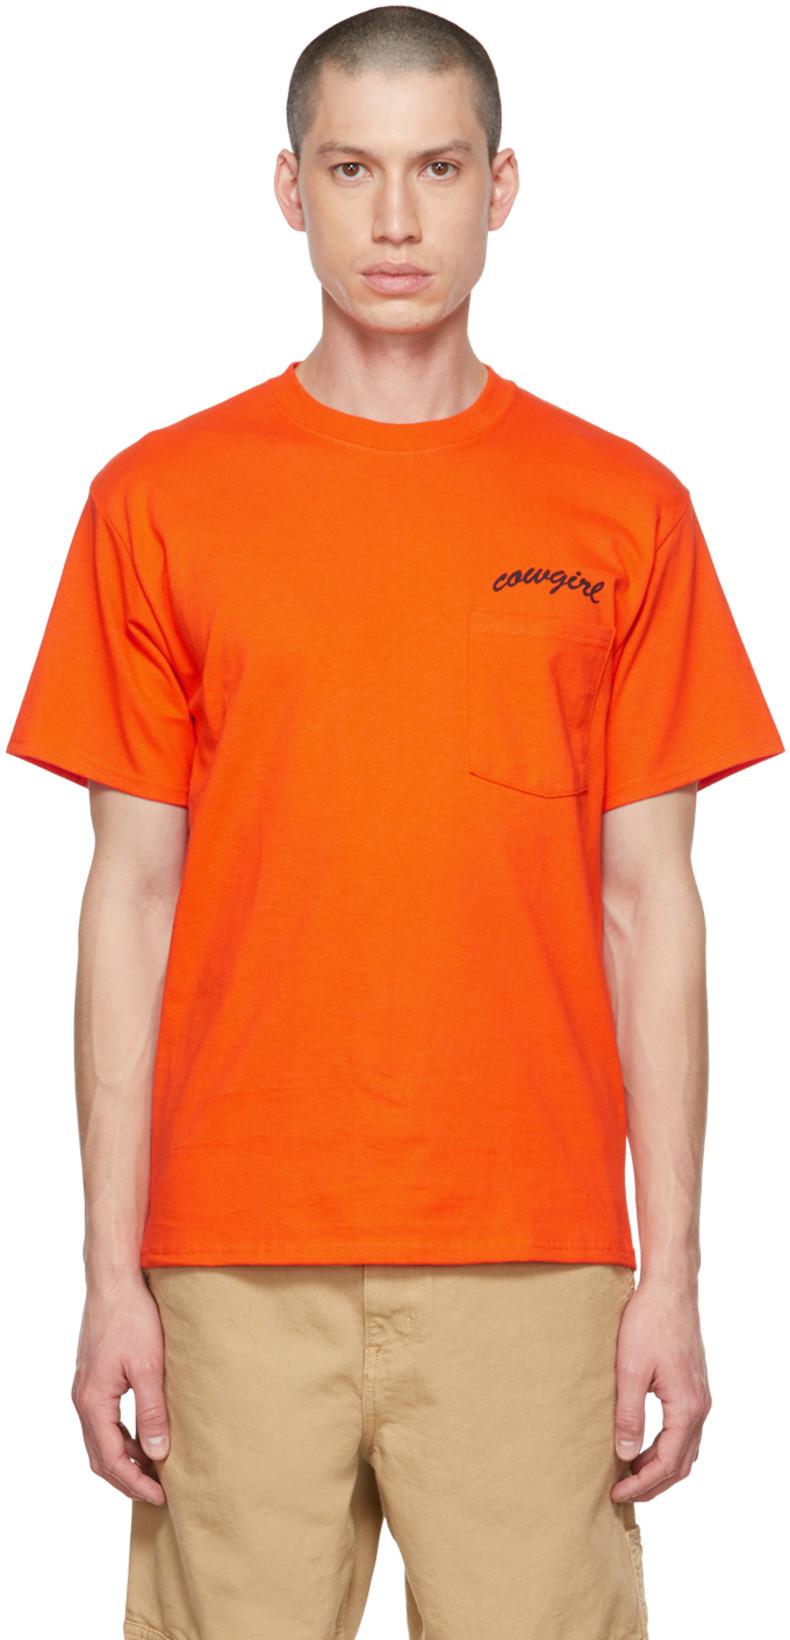 Orange Pocket T-Shirt by COWGIRL BLUE CO